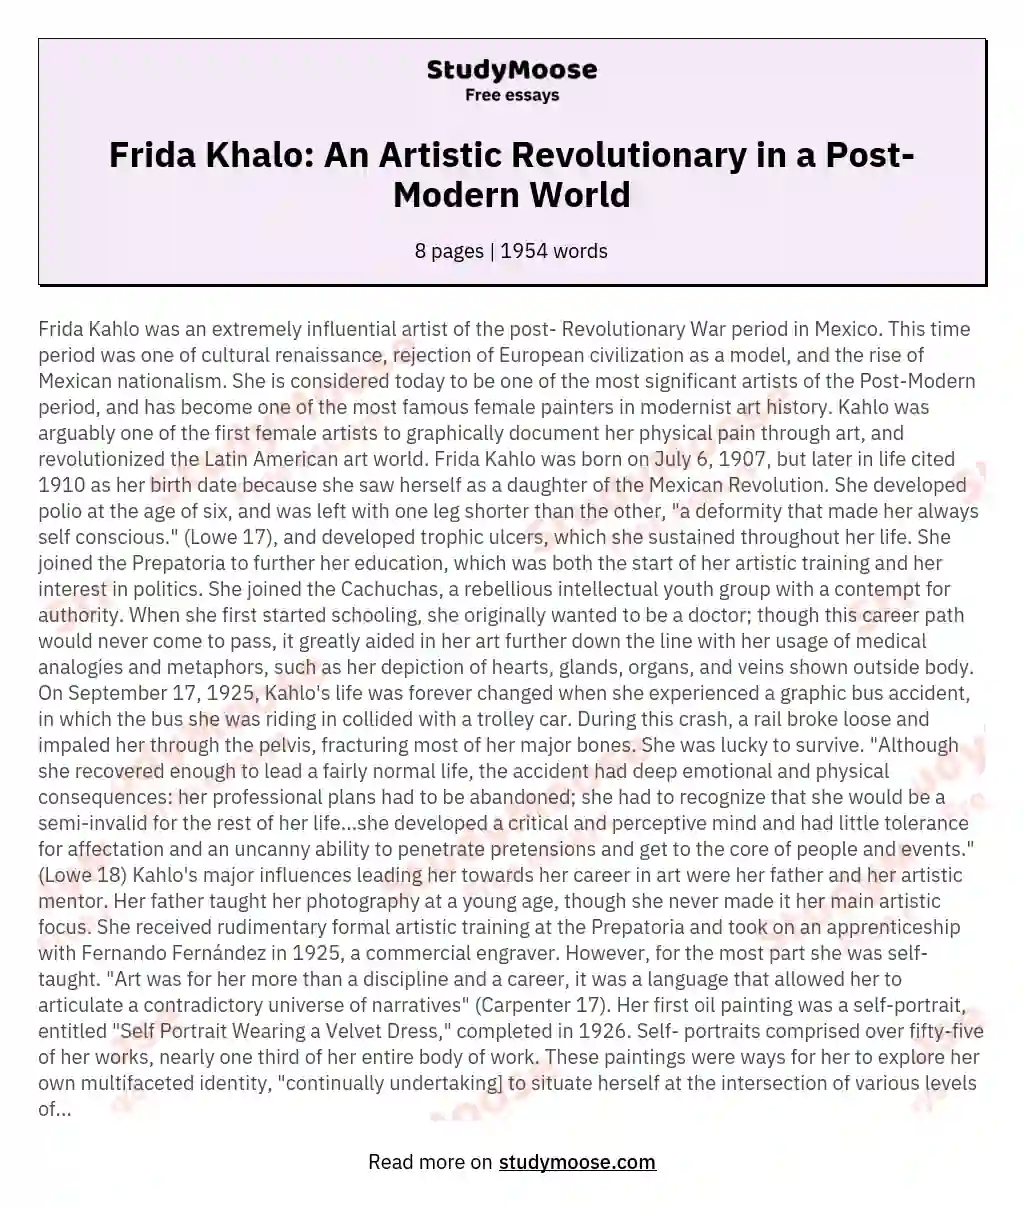 Frida Khalo: An Artistic Revolutionary in a Post-Modern World essay